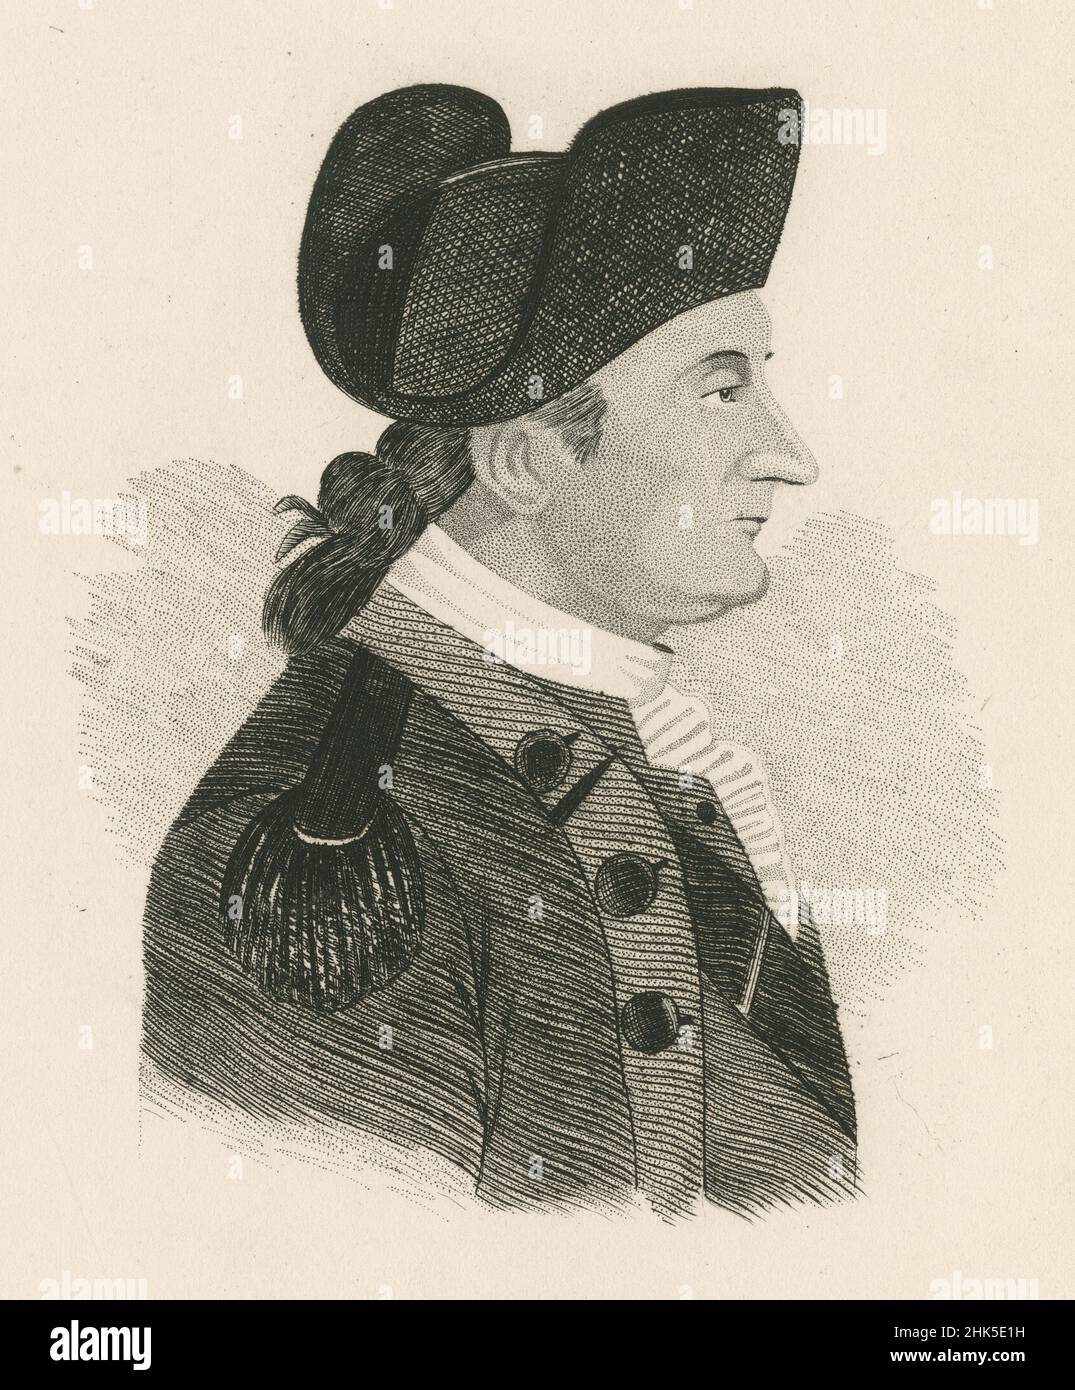 Antique circa 1850 engraving of Enoch Poor. Enoch Poor (1736-1780) was a brigadier general in the Continental Army during the American Revolutionary War. SOURCE: ORIGINAL ENGRAVING Stock Photo